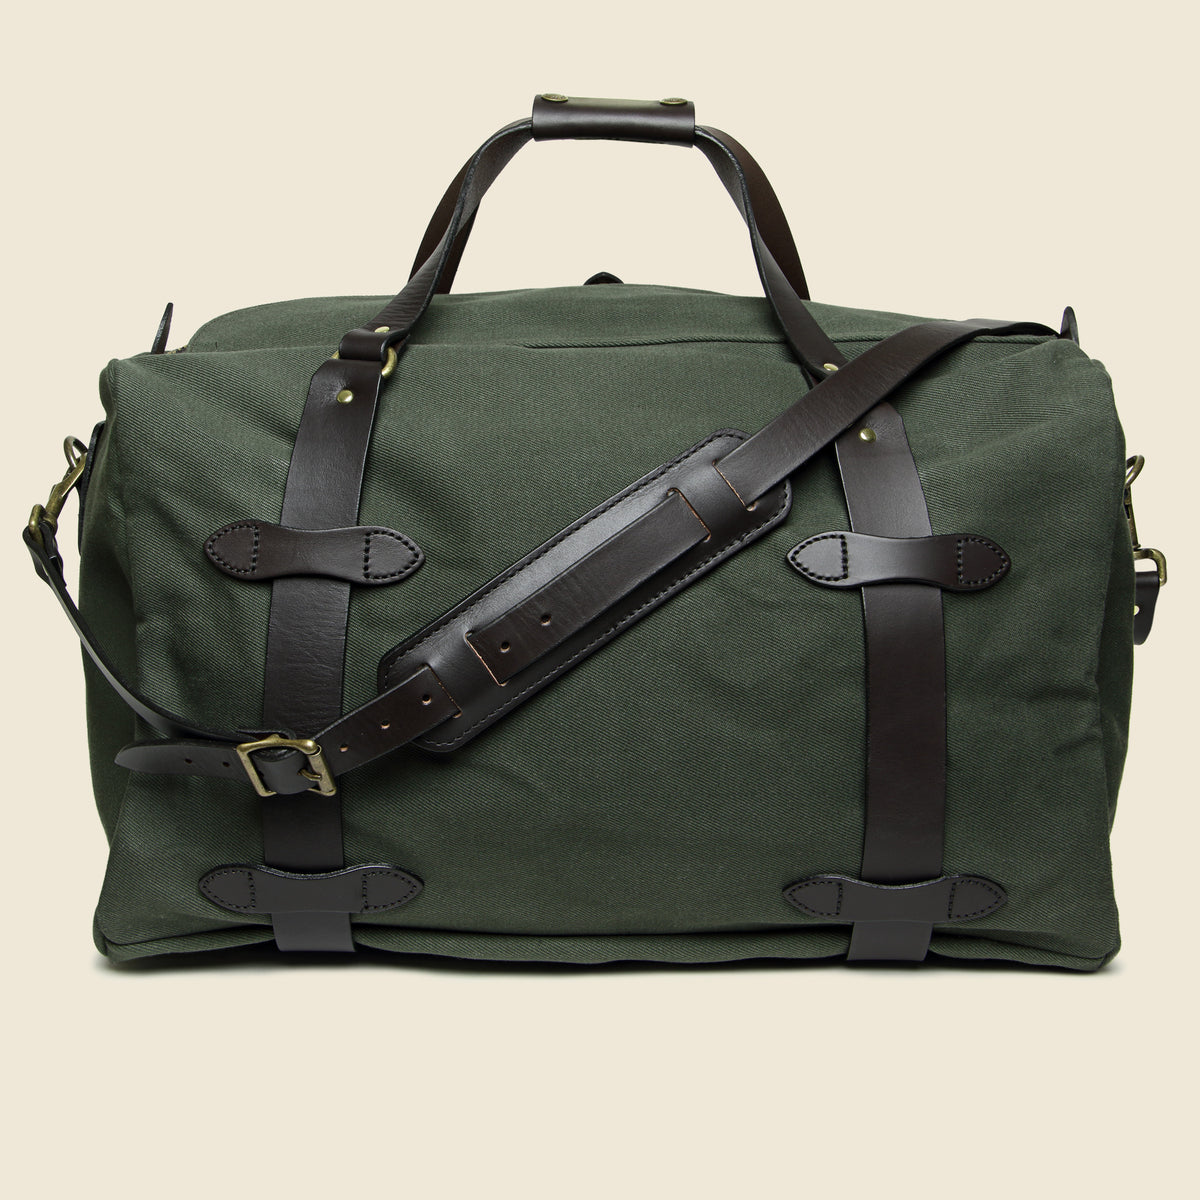 Medium Carry-On Duffle Bag - Otter Green